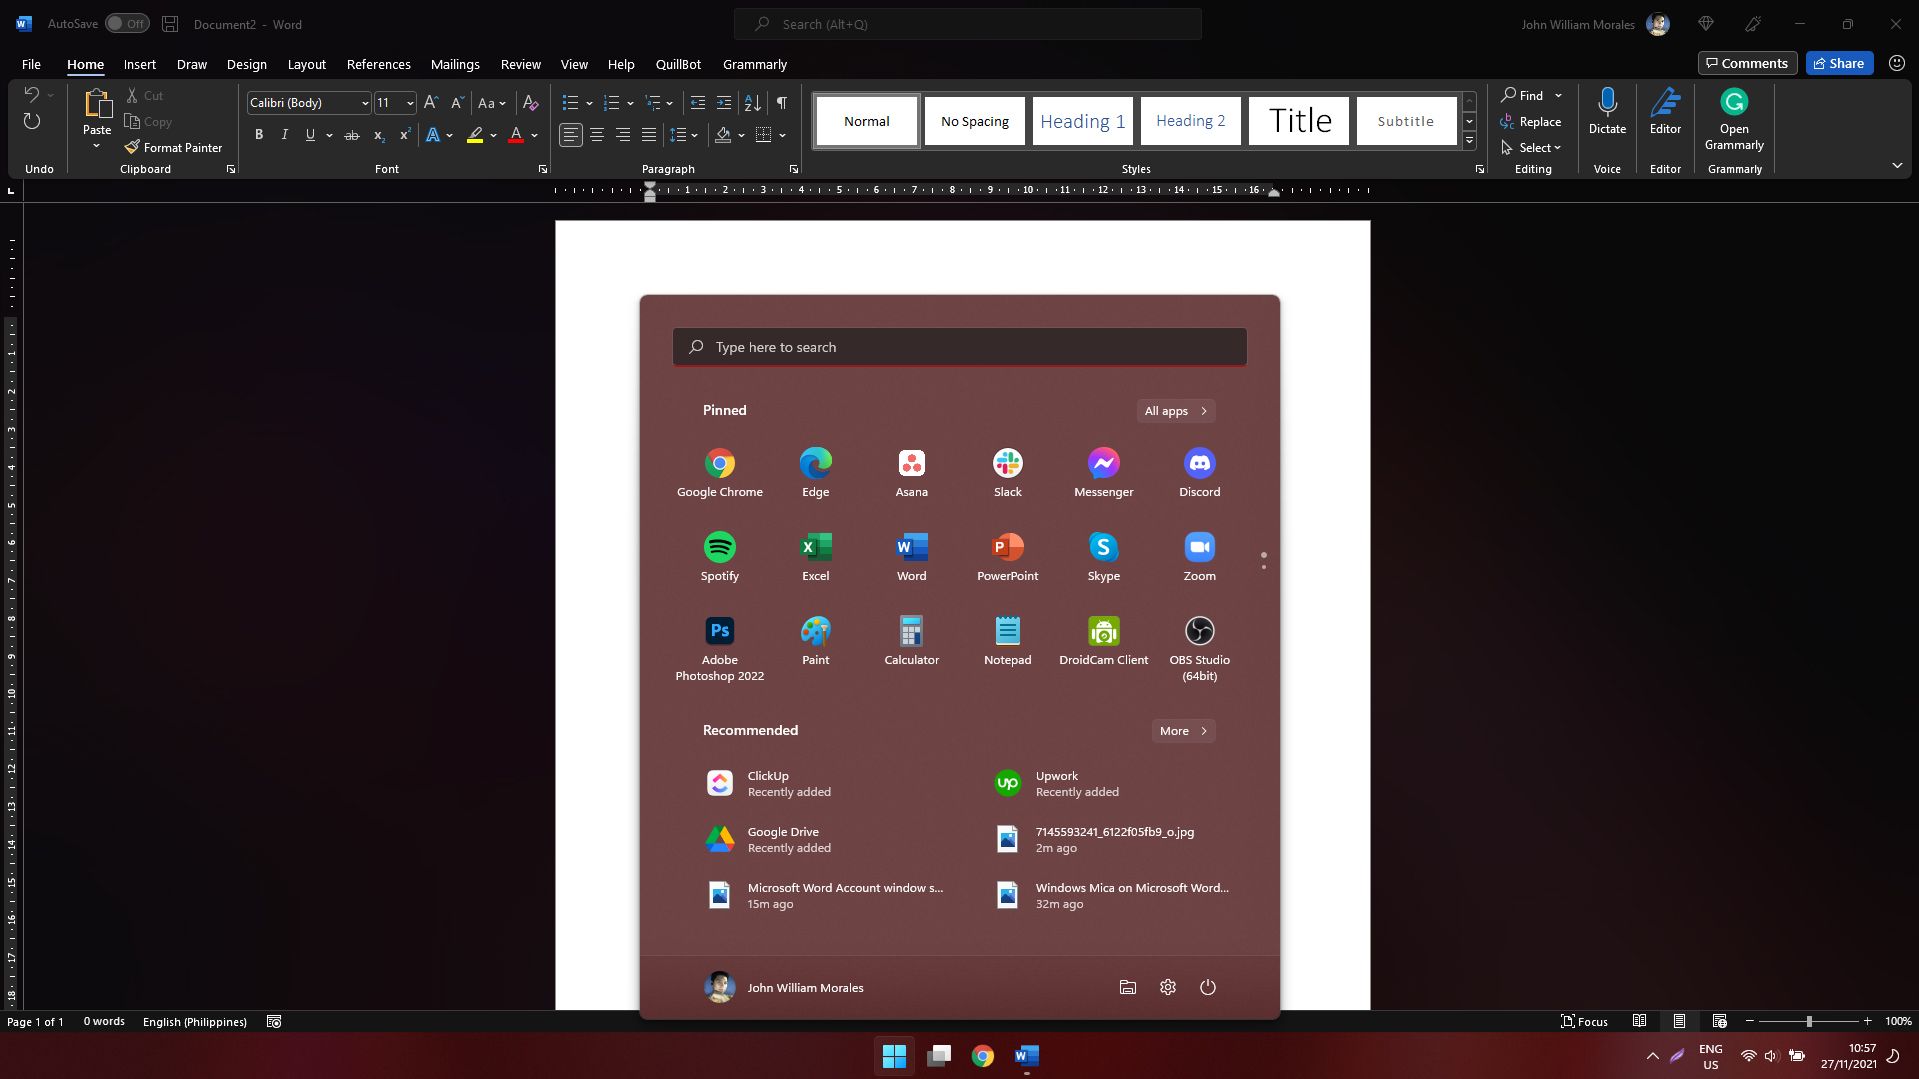 Full-screen view Windows Mica on Microsoft Word using Windows 11